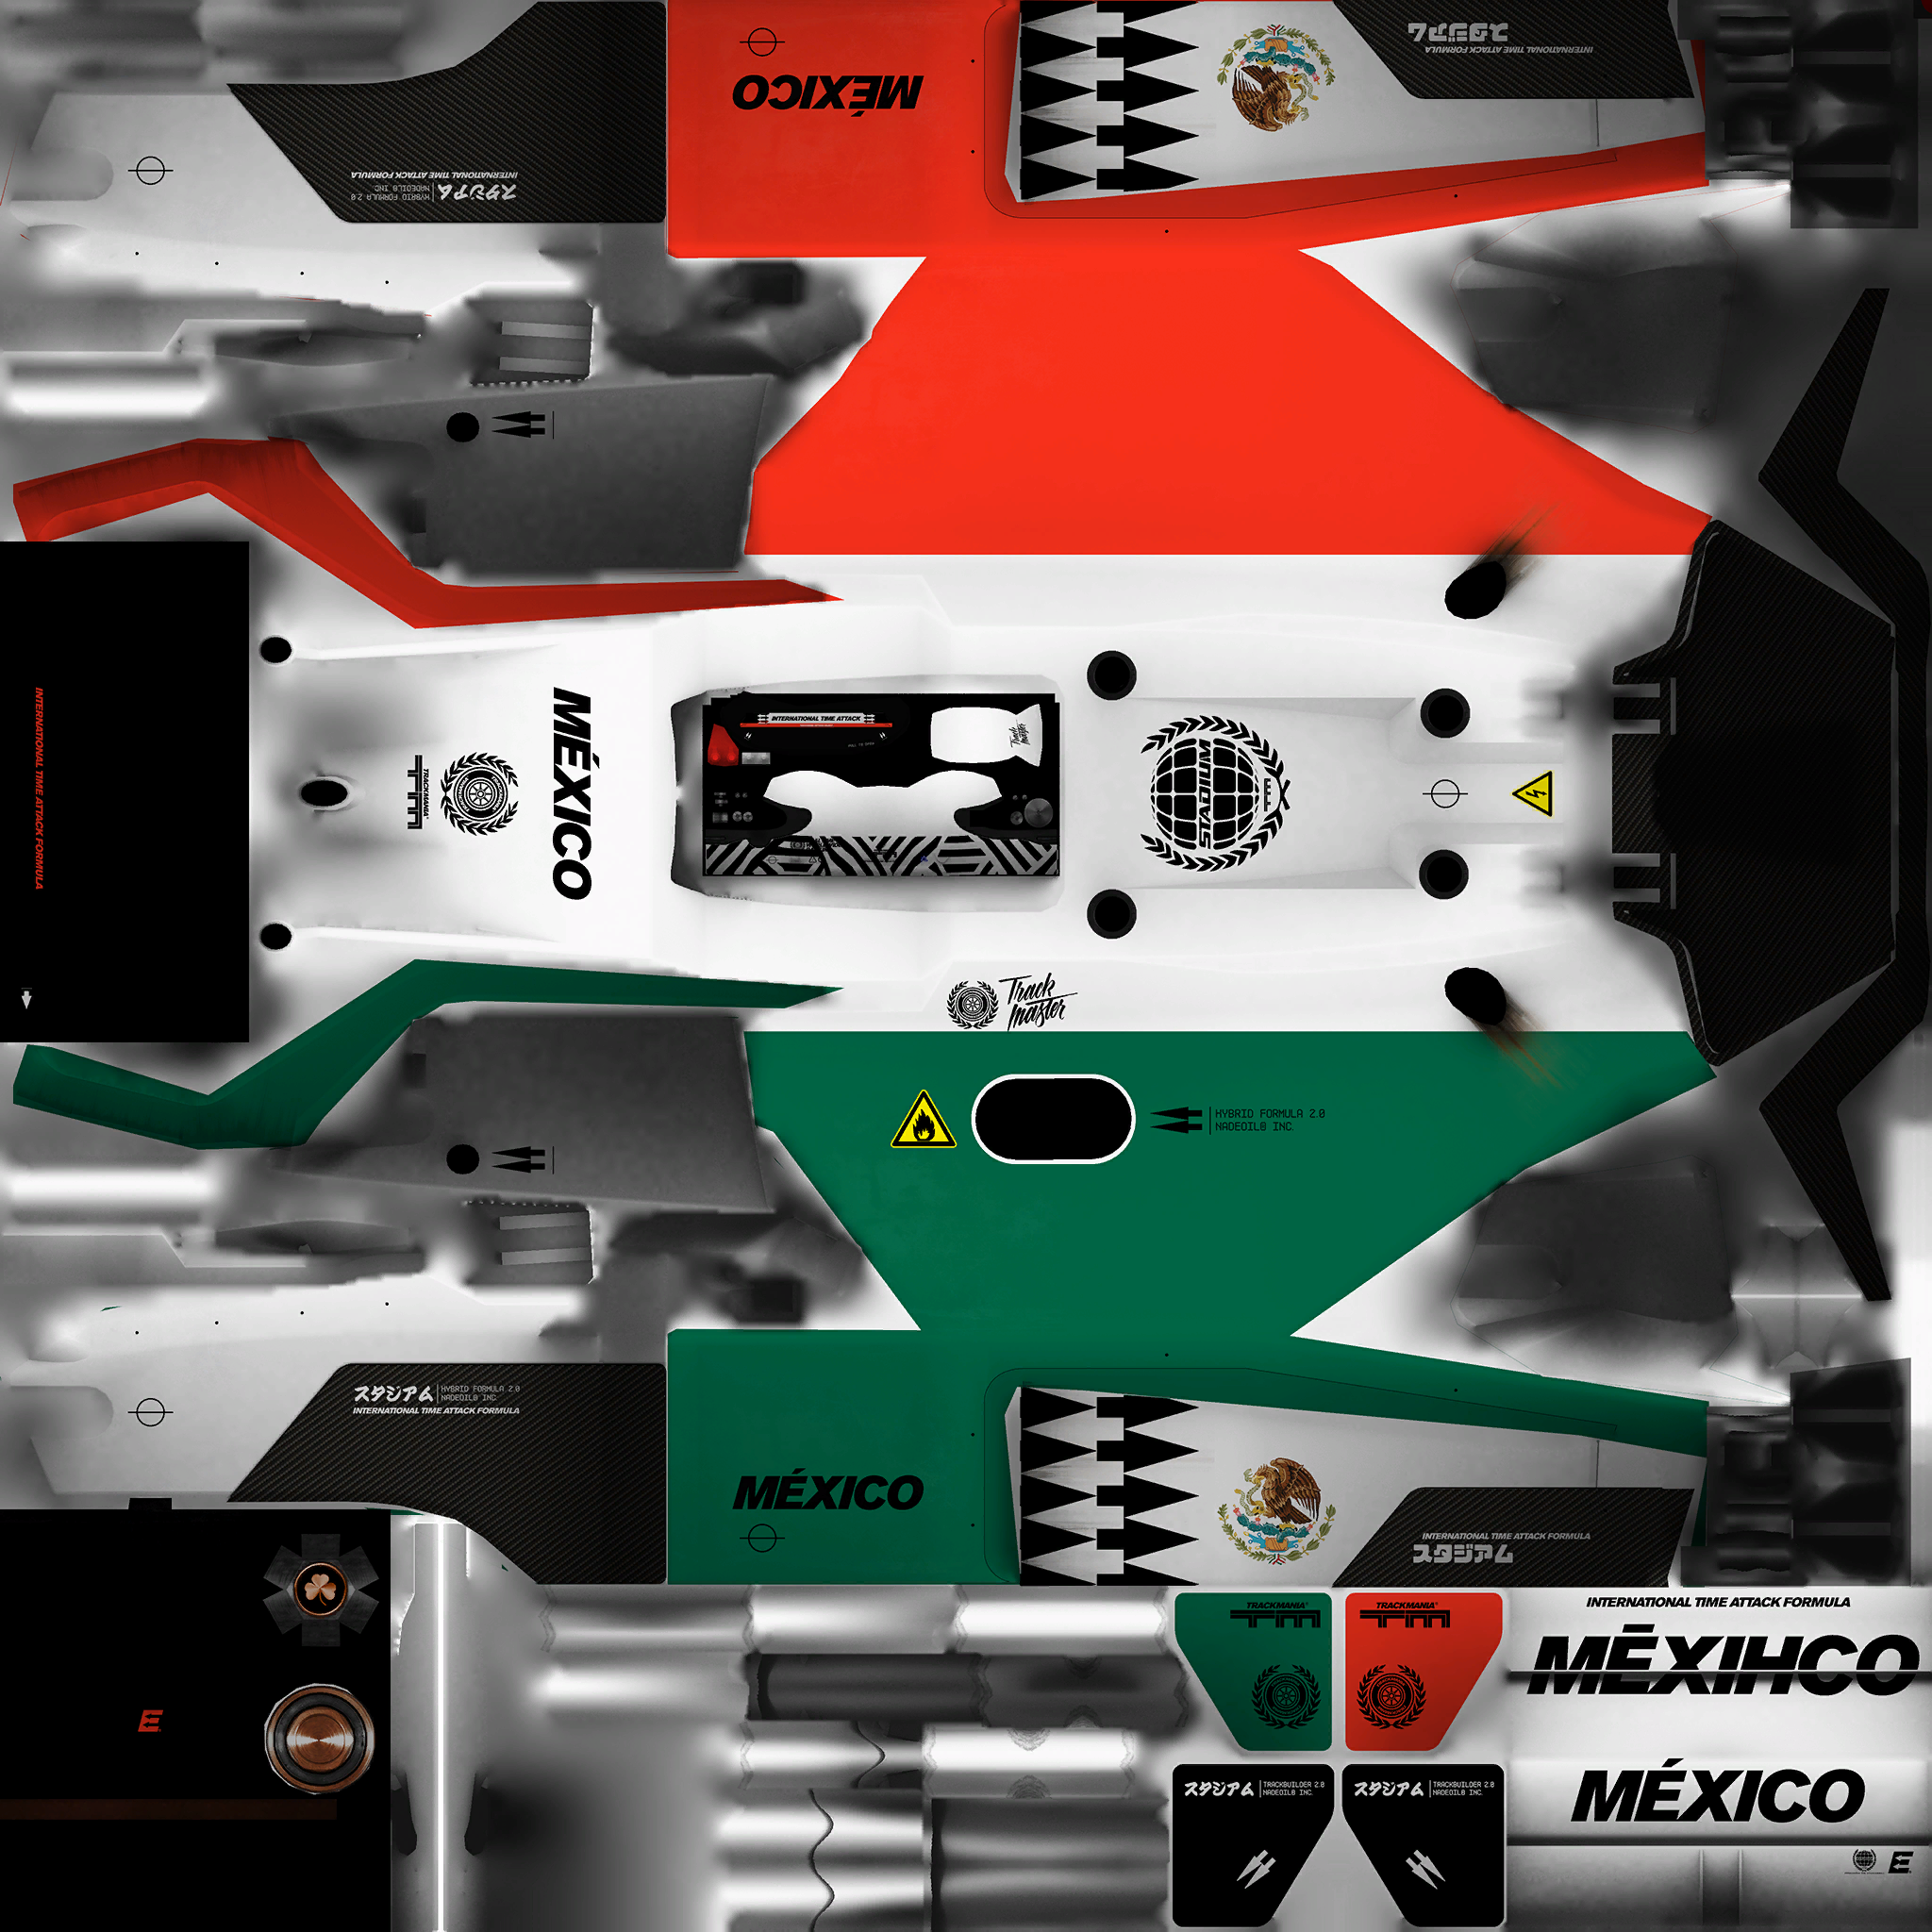 TrackMania Turbo - Arcade: Mexico